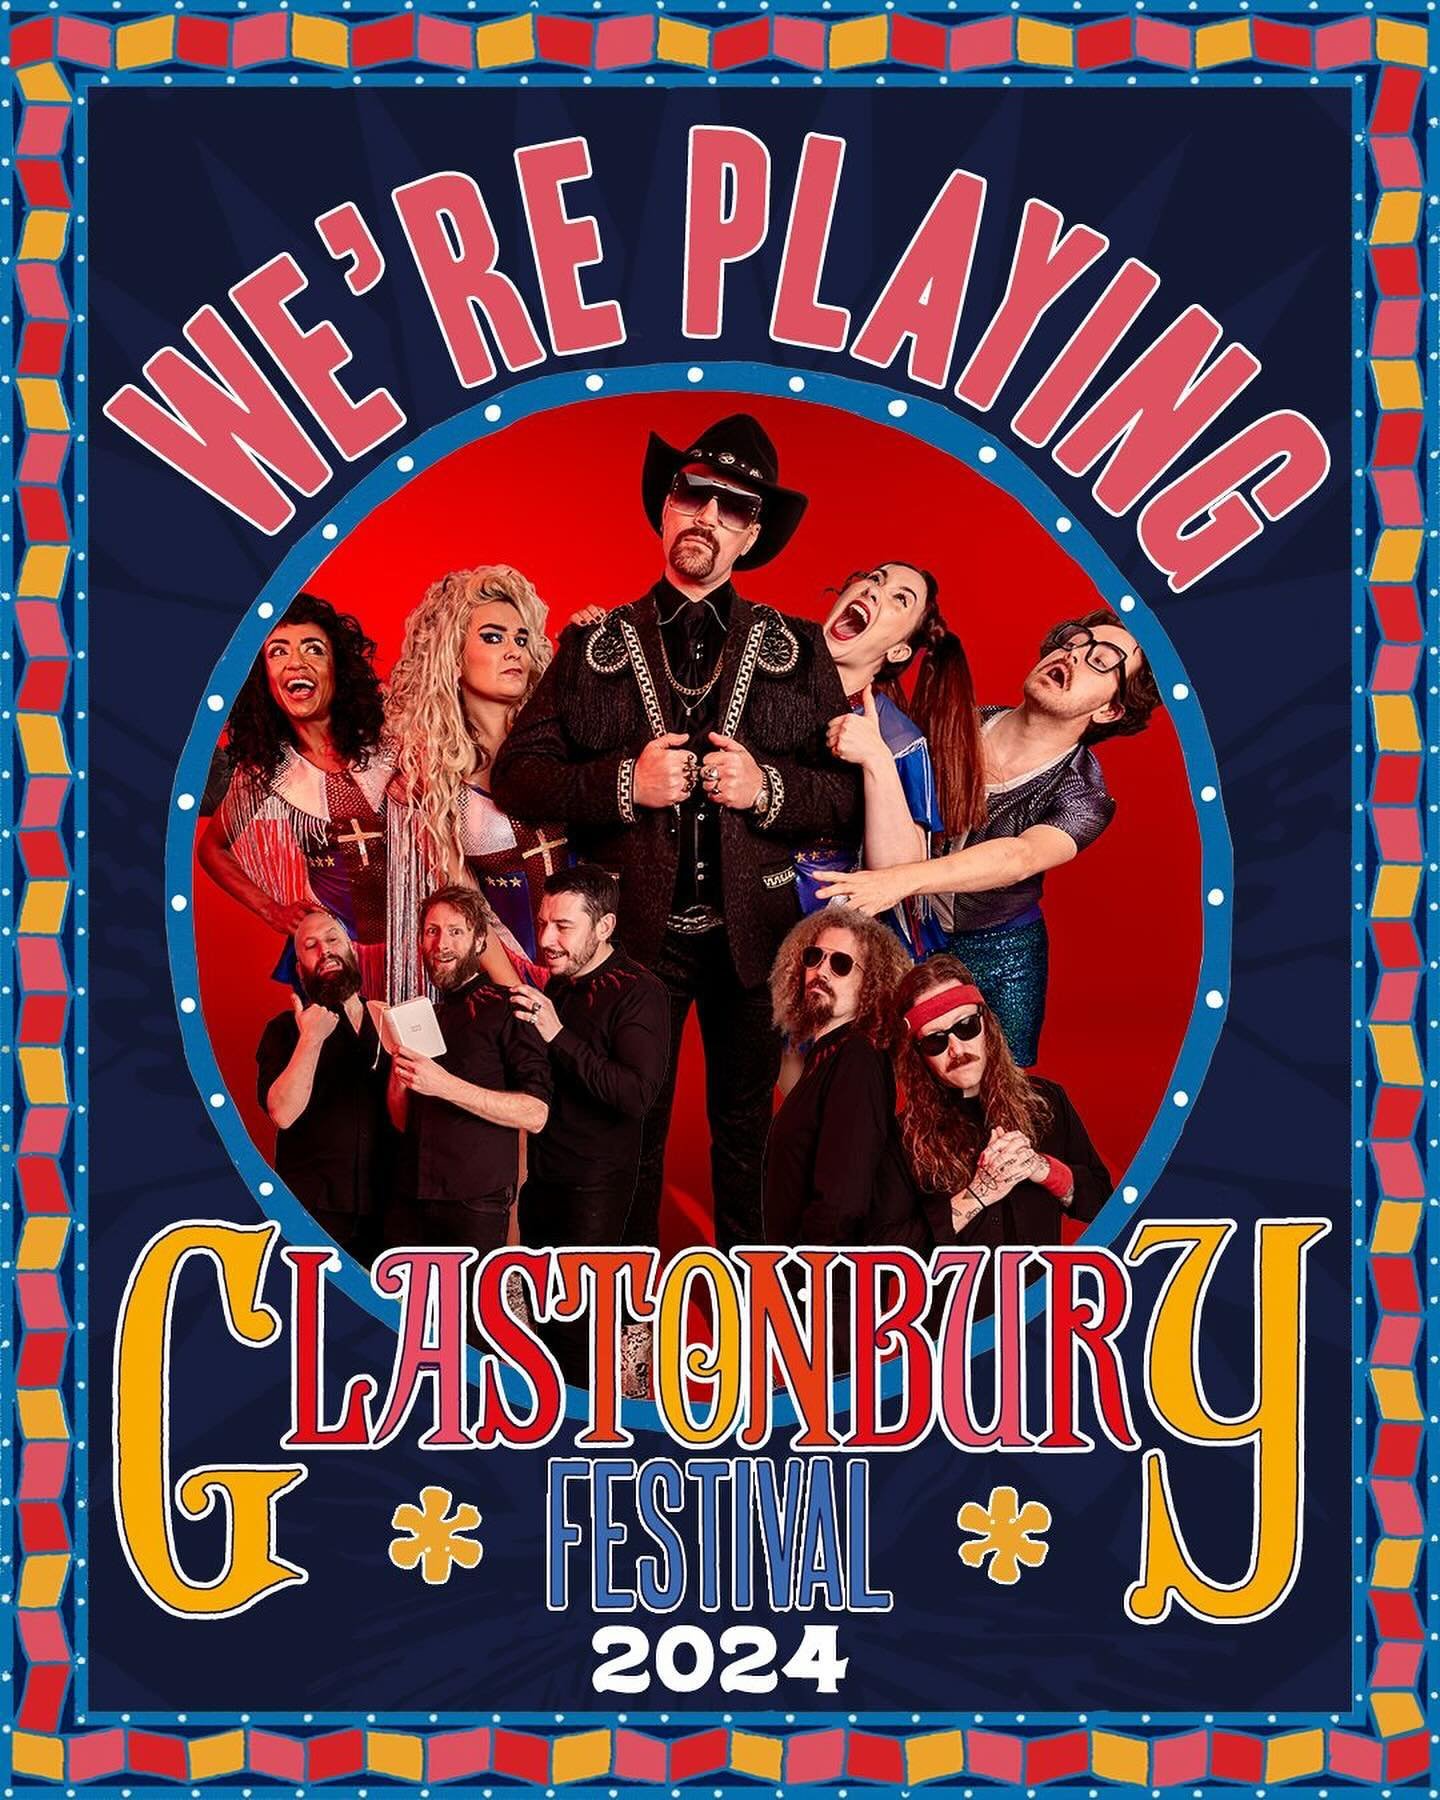 GlastonBRA! We&rsquo;re BACK! Find us @glastosensationseekers @theatre_circus_glastonbury on Fri 28 + Sat 29 June 🙏
@glastofest